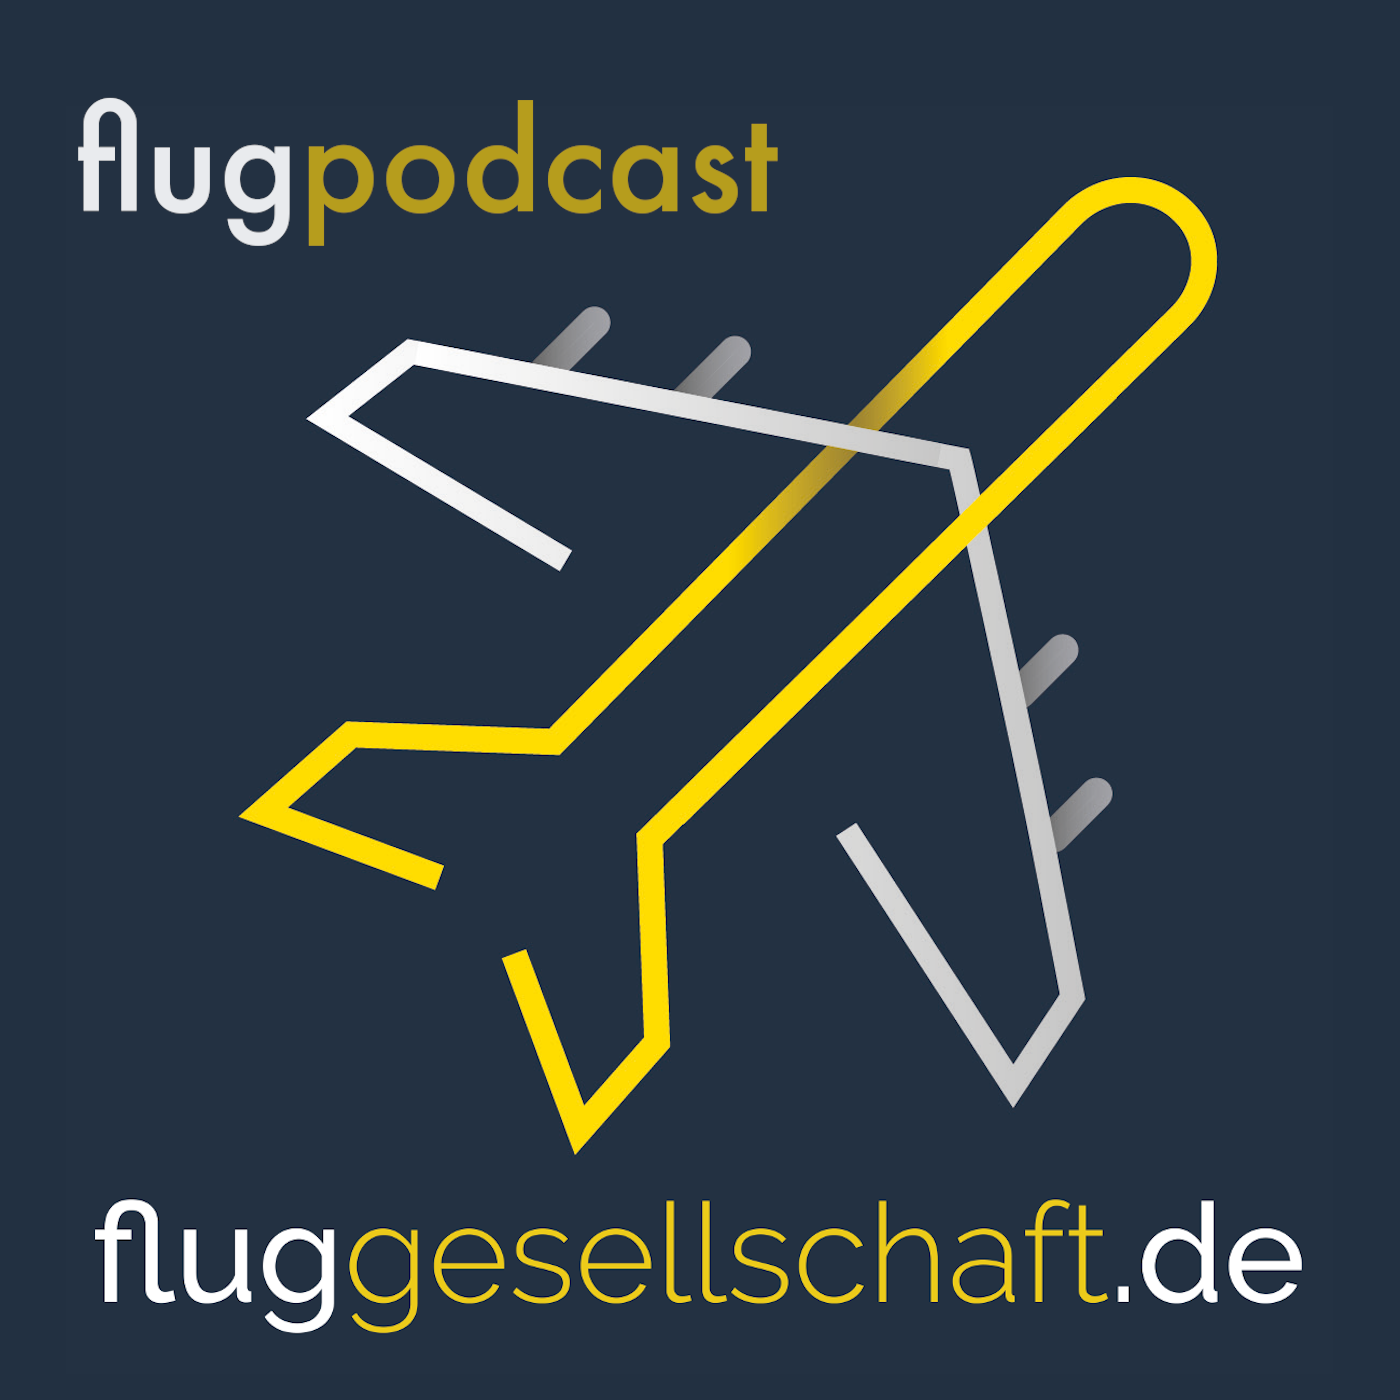 Flugpodcast Fluggesellschaft.de